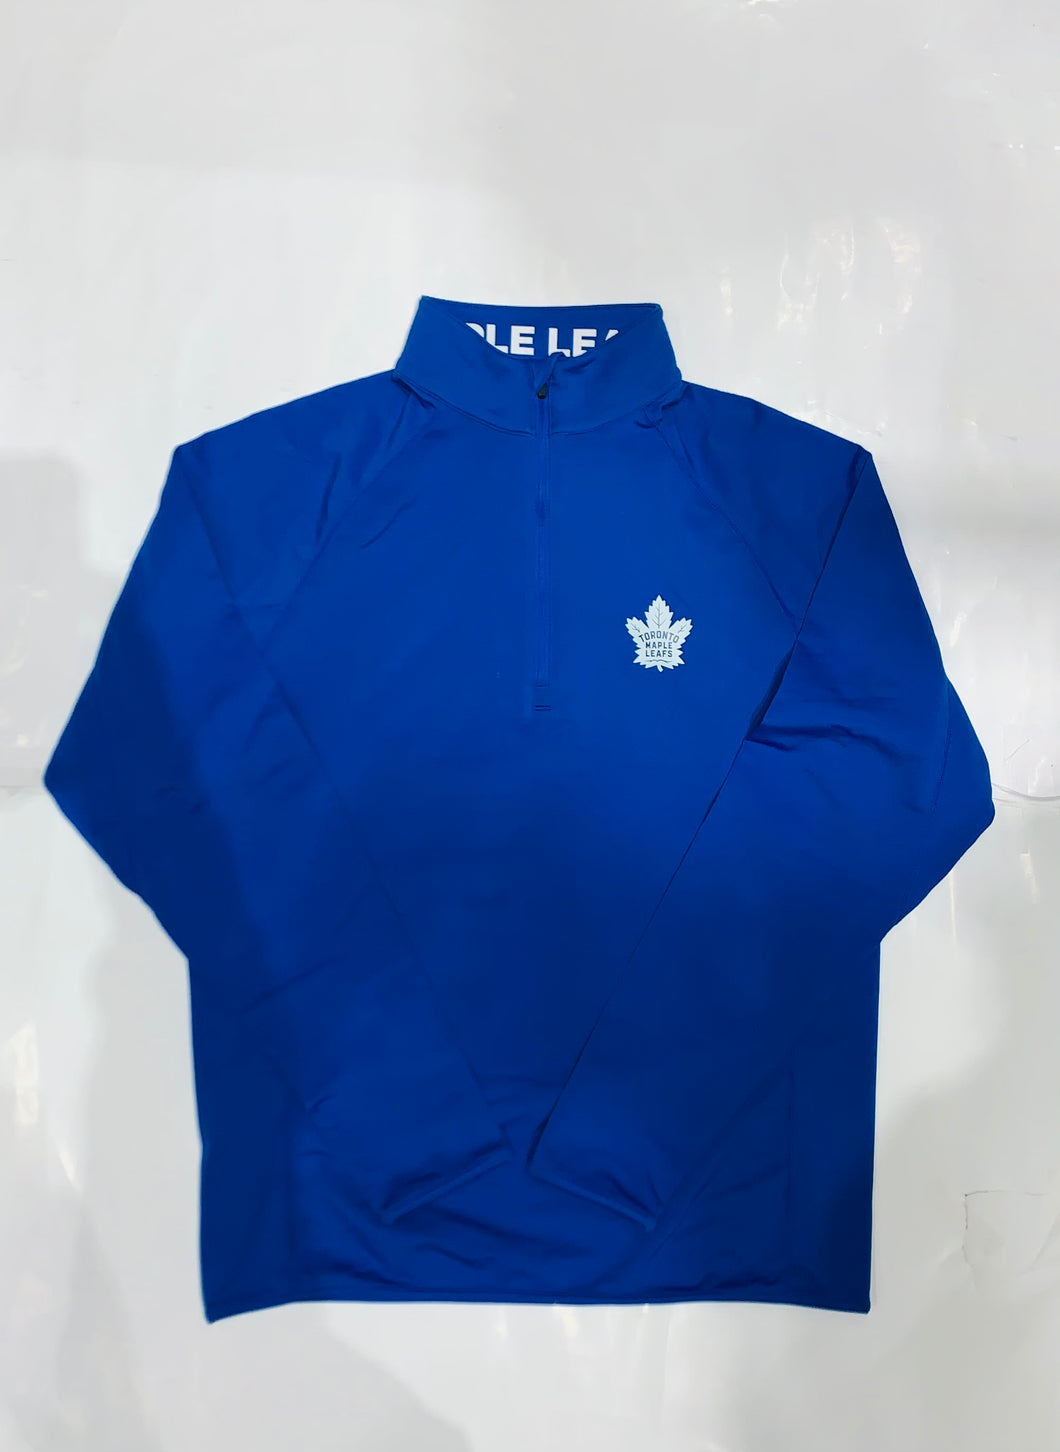 Toronto Maple Leafs Royal Blue 1/4 Zip Track Jacket